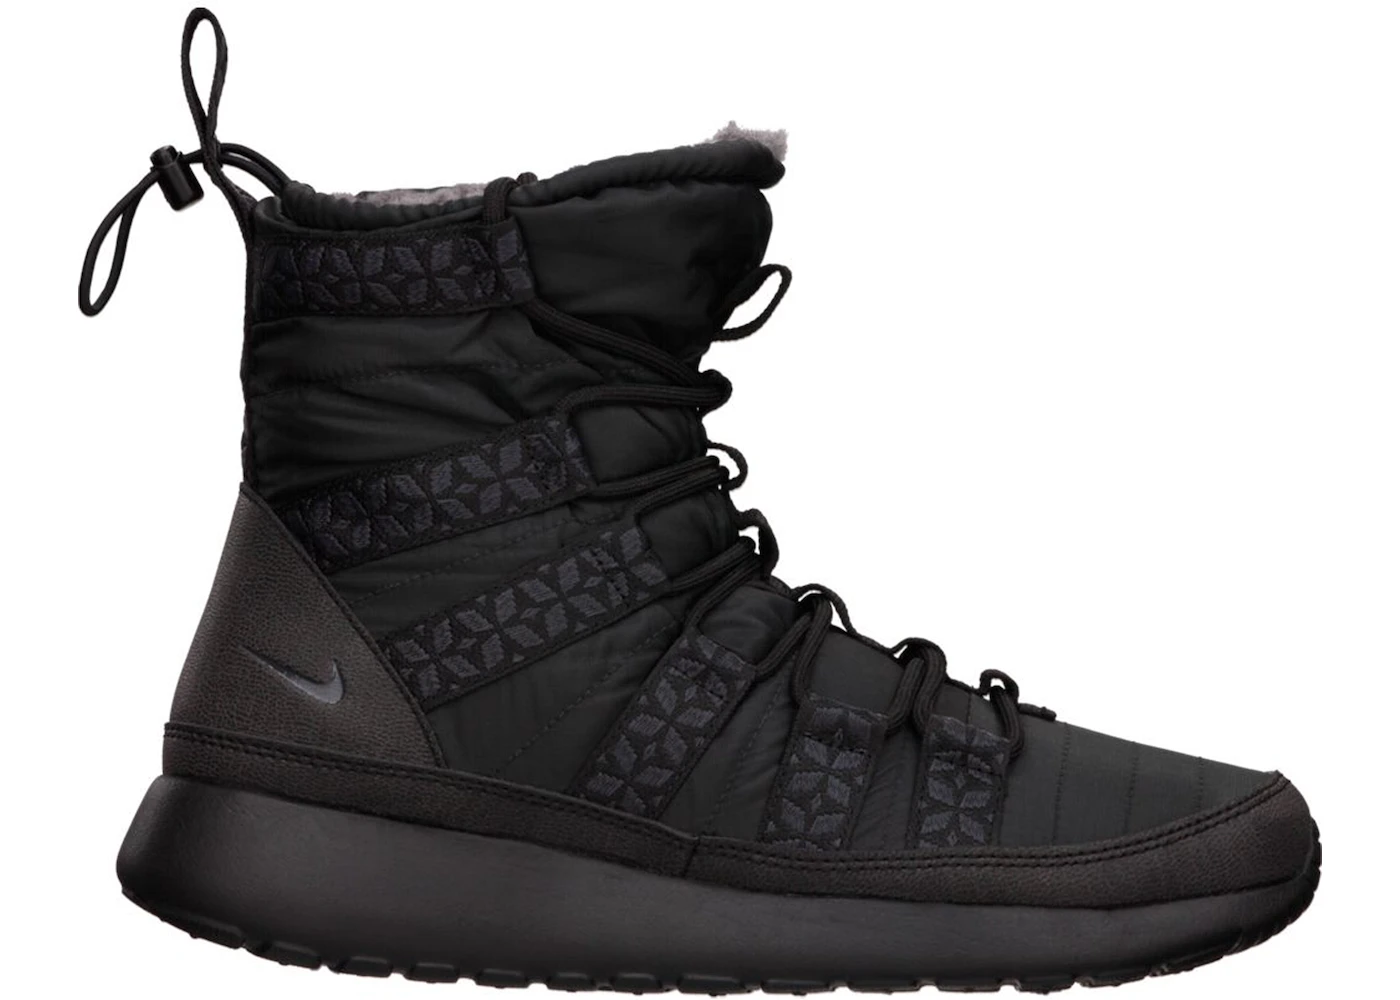 Cha difícil de complacer Patentar Nike Roshe Run Hi Sneakerboot Black (Women's) - 615968-006 - US